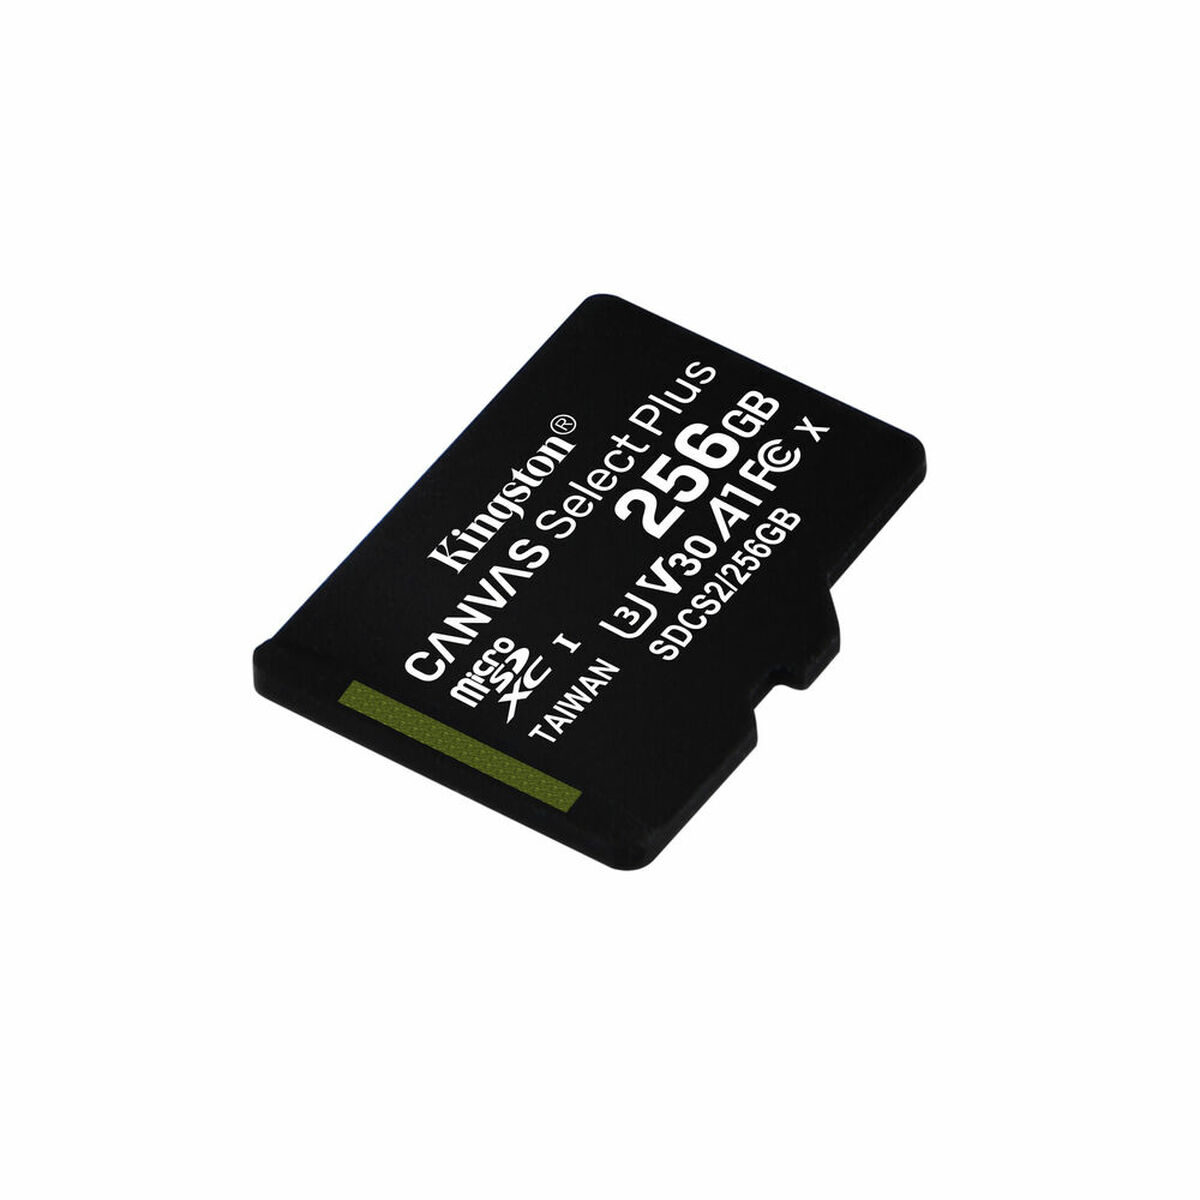 256 GB Speicherkarte, Micro-SD SDCS2/256GBSP, KINGSTON